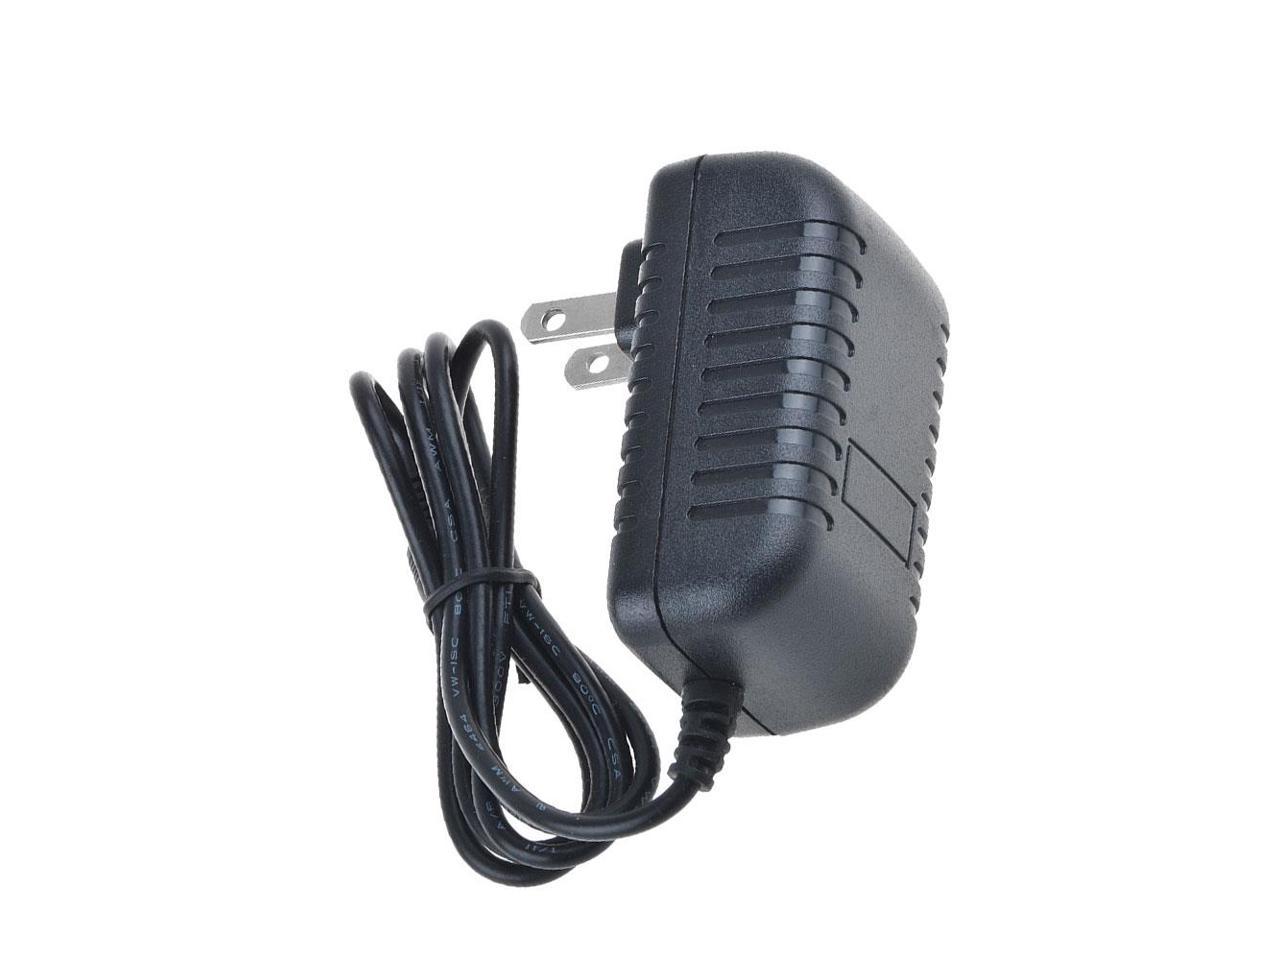 Global AC Adapter For SEGA Master System II 2 Pack 4 3025 Power Supply MK-3025 